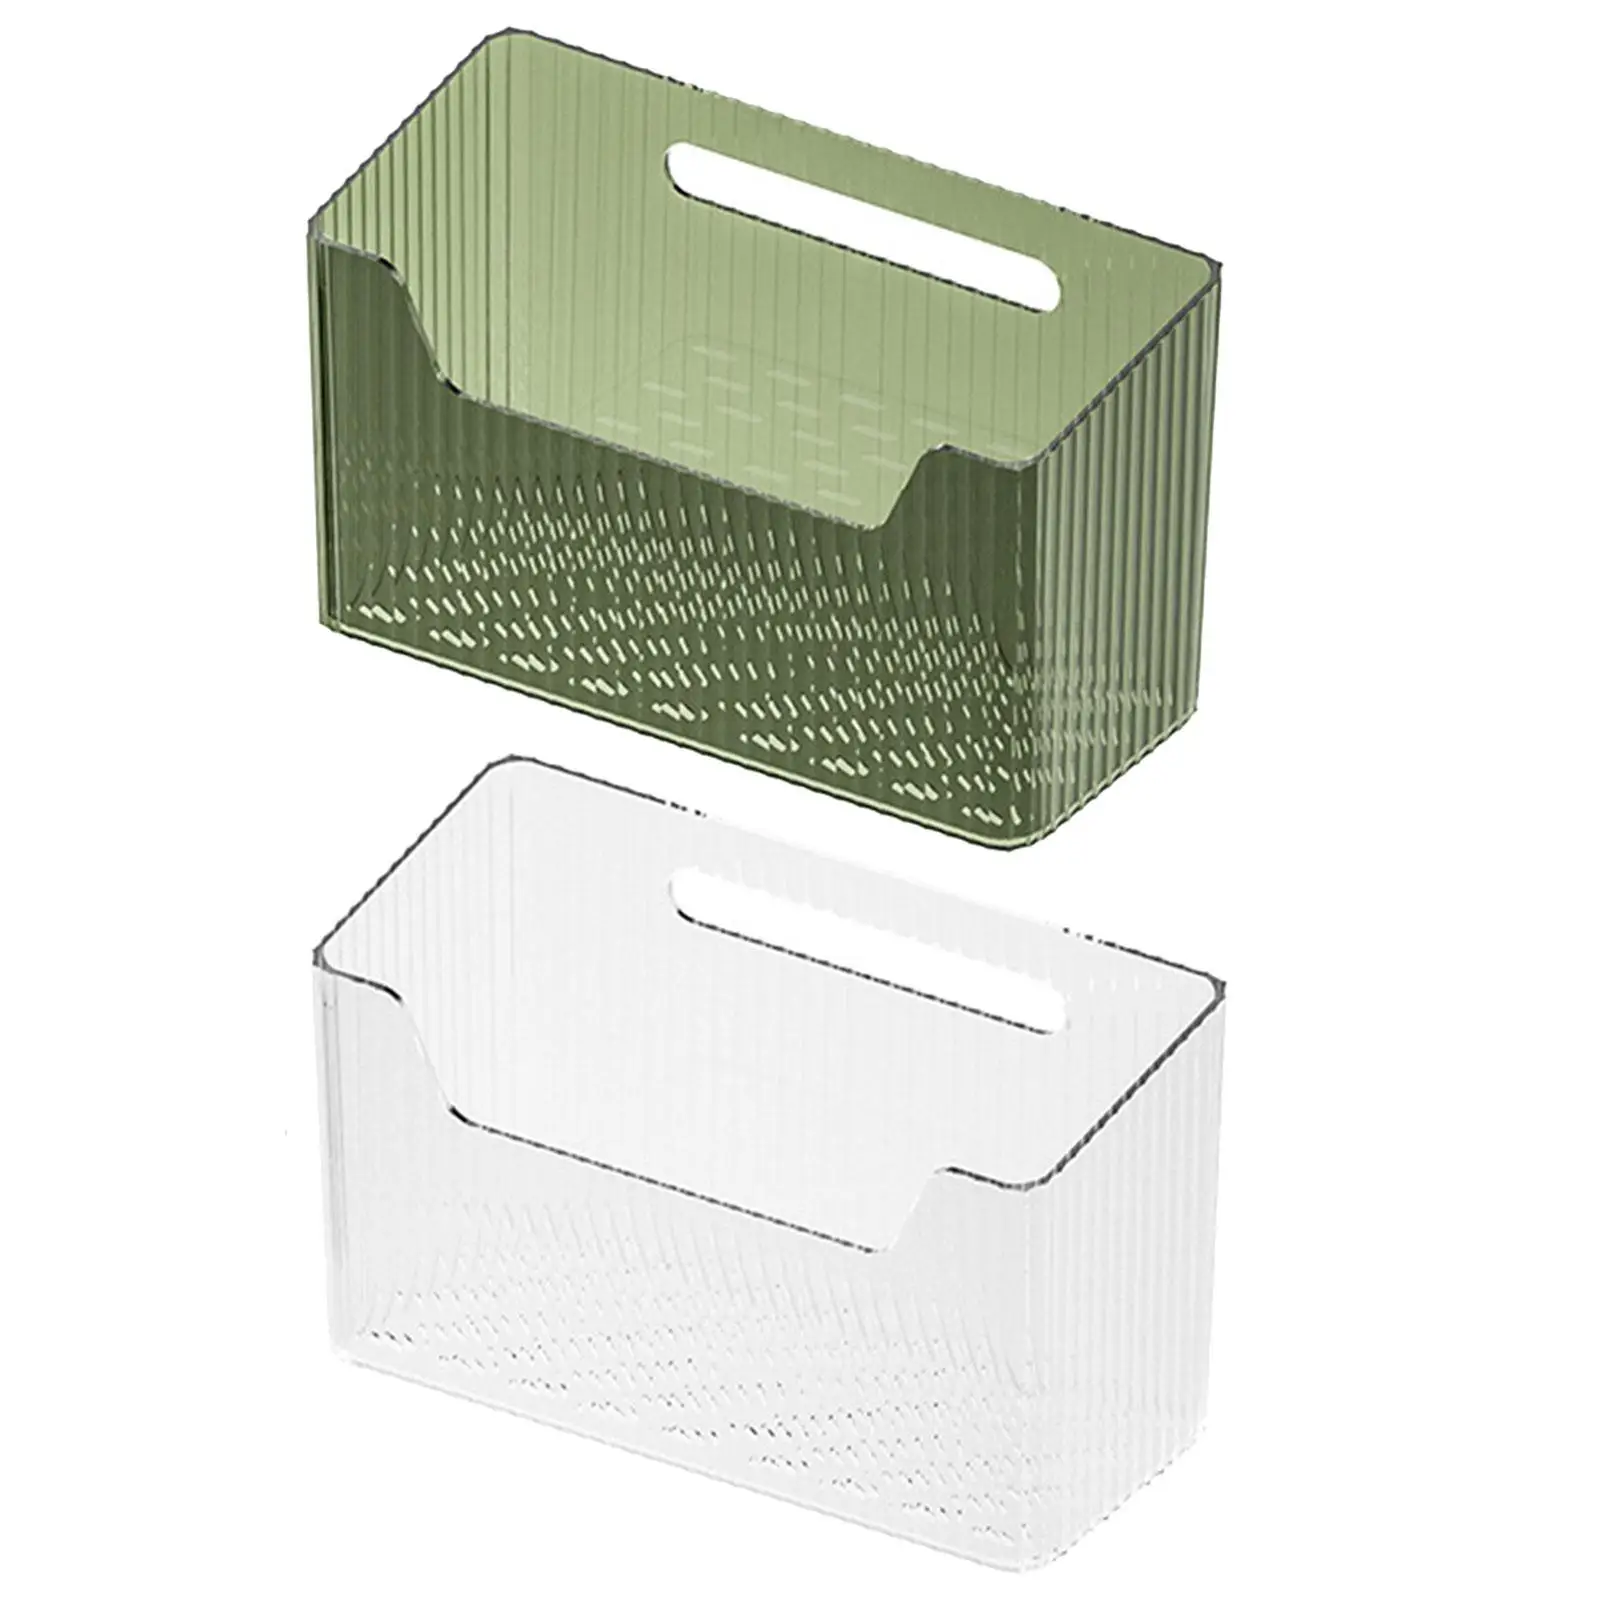 Product Storage Box Bathroom Storage Rack for Toilet Work Supplies